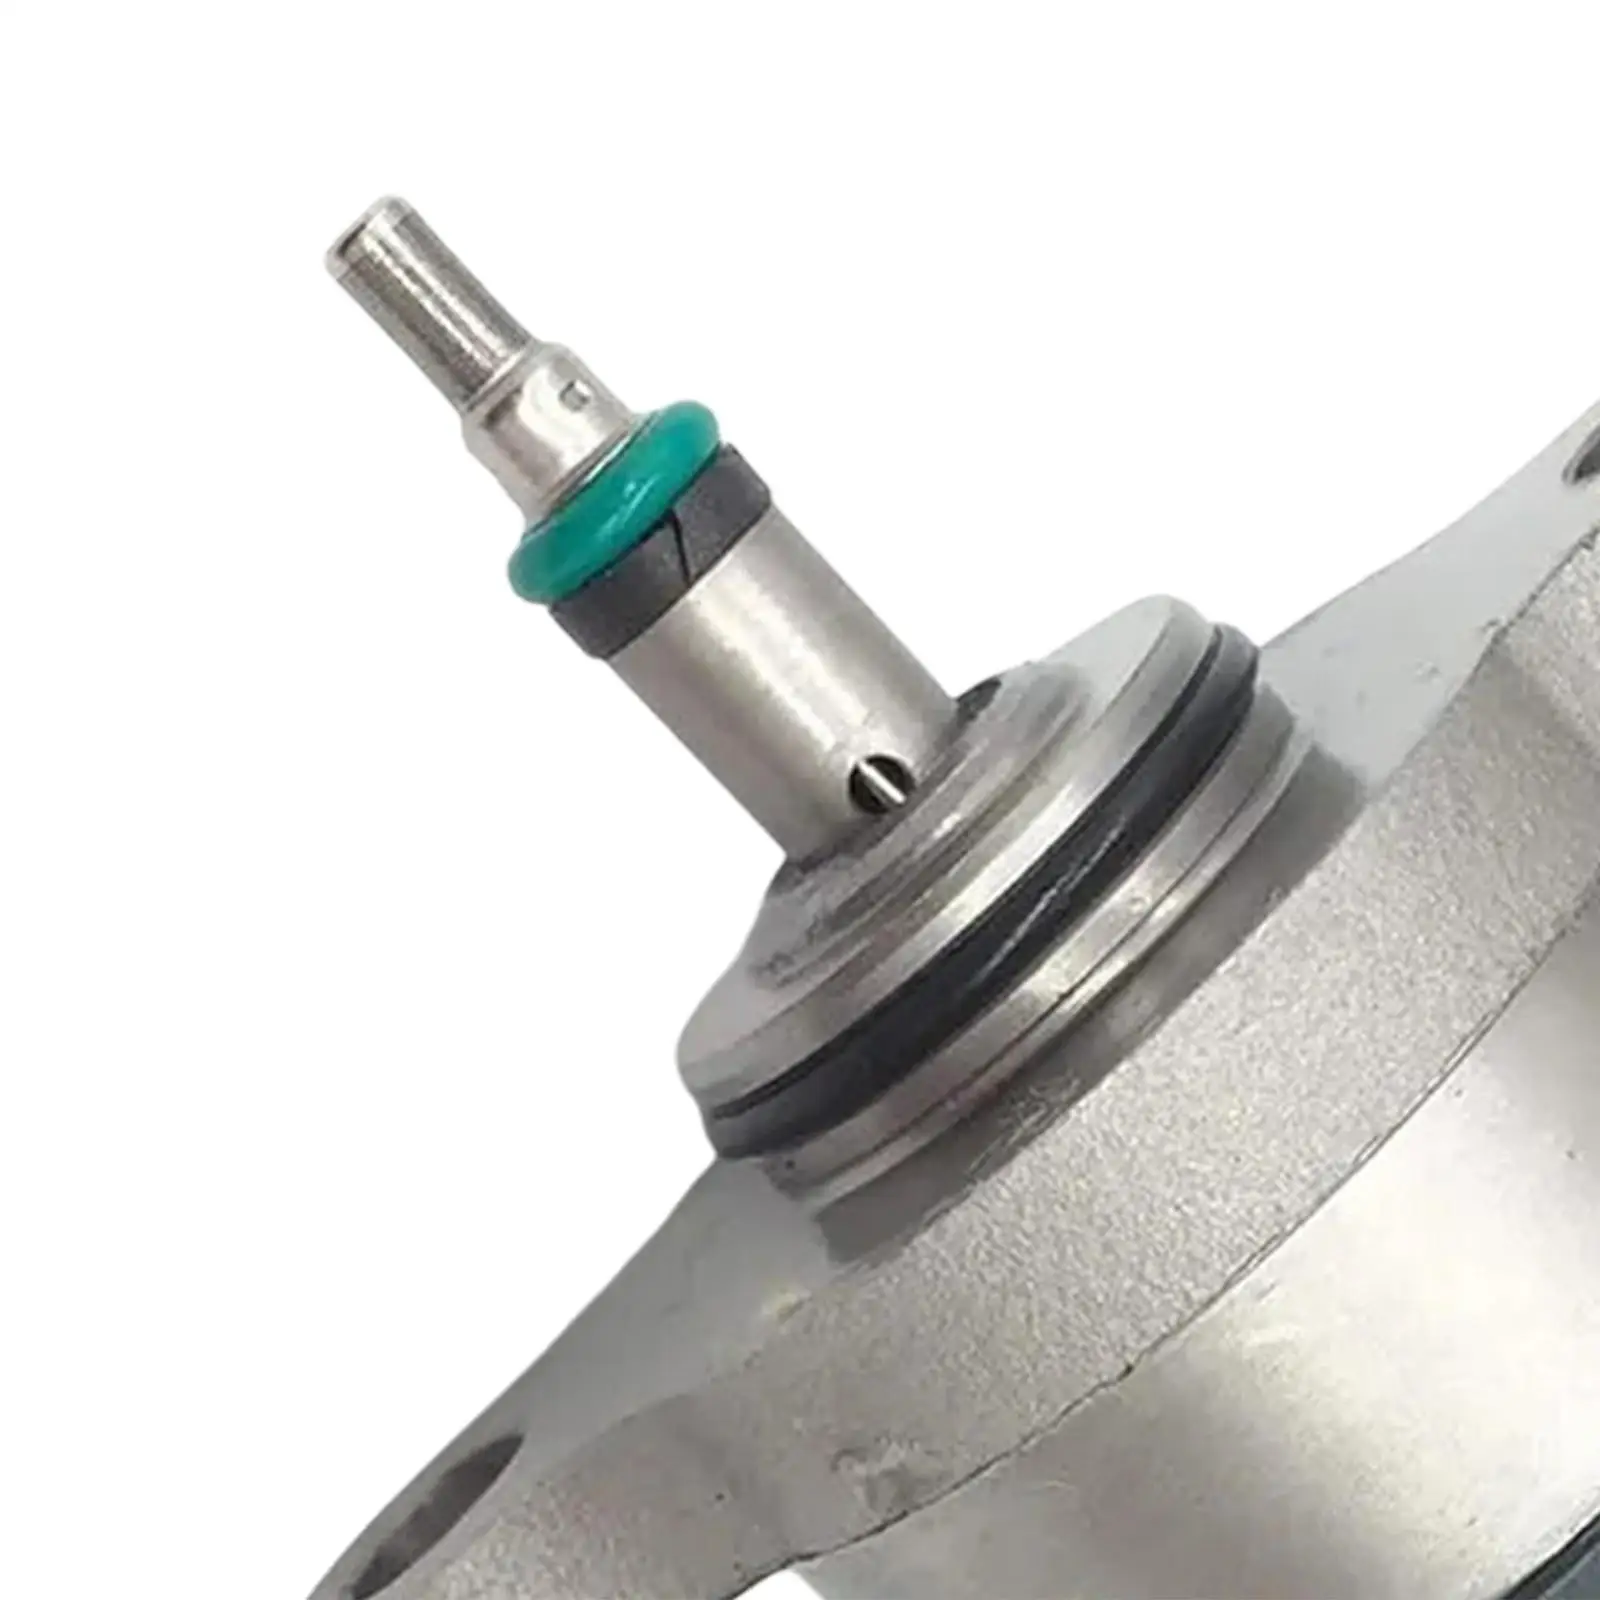 Common Rail Fuel Pressure Regulator Valve 0281002718 High Quality Replace Parts for Kia 1.5 2.0 Crdi Automotive Accessories